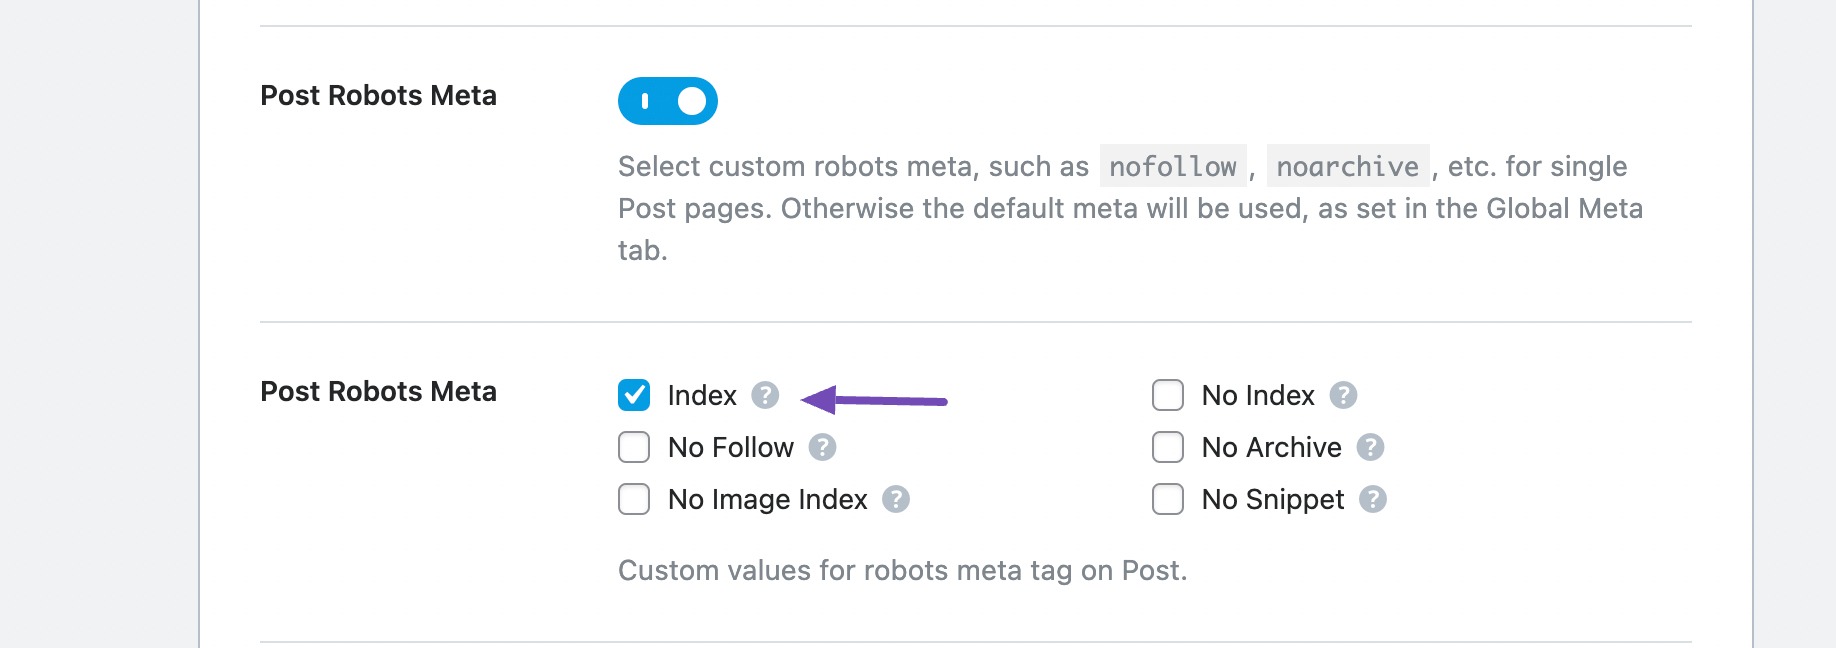 Verifique Post Robots Meta